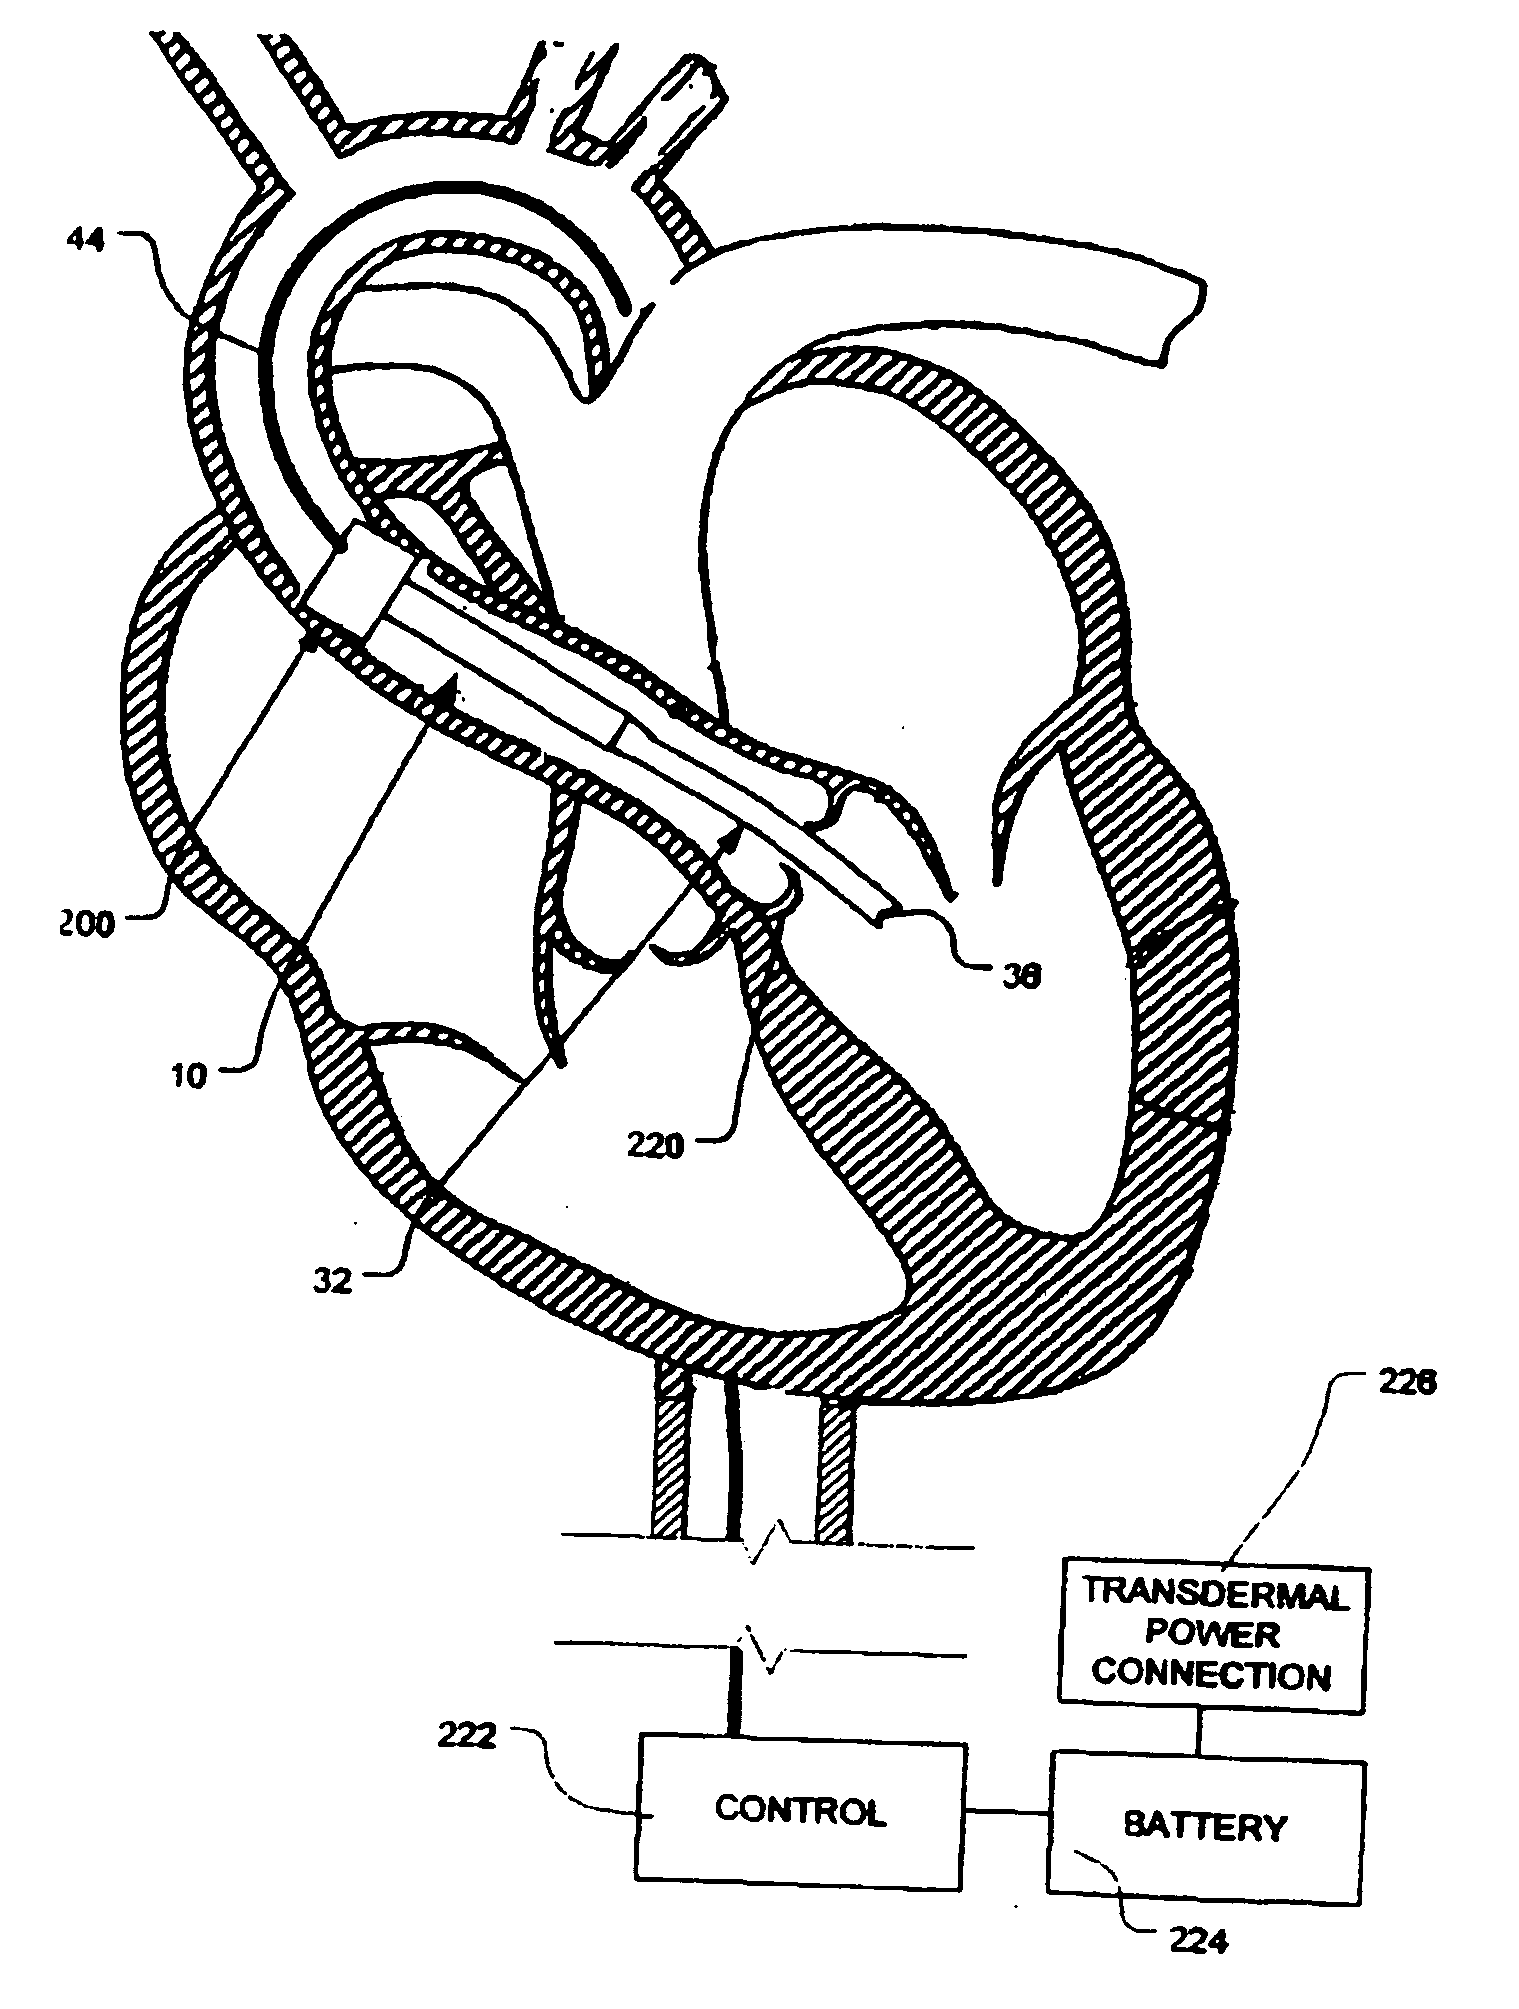 Intravascular ventricular assist device